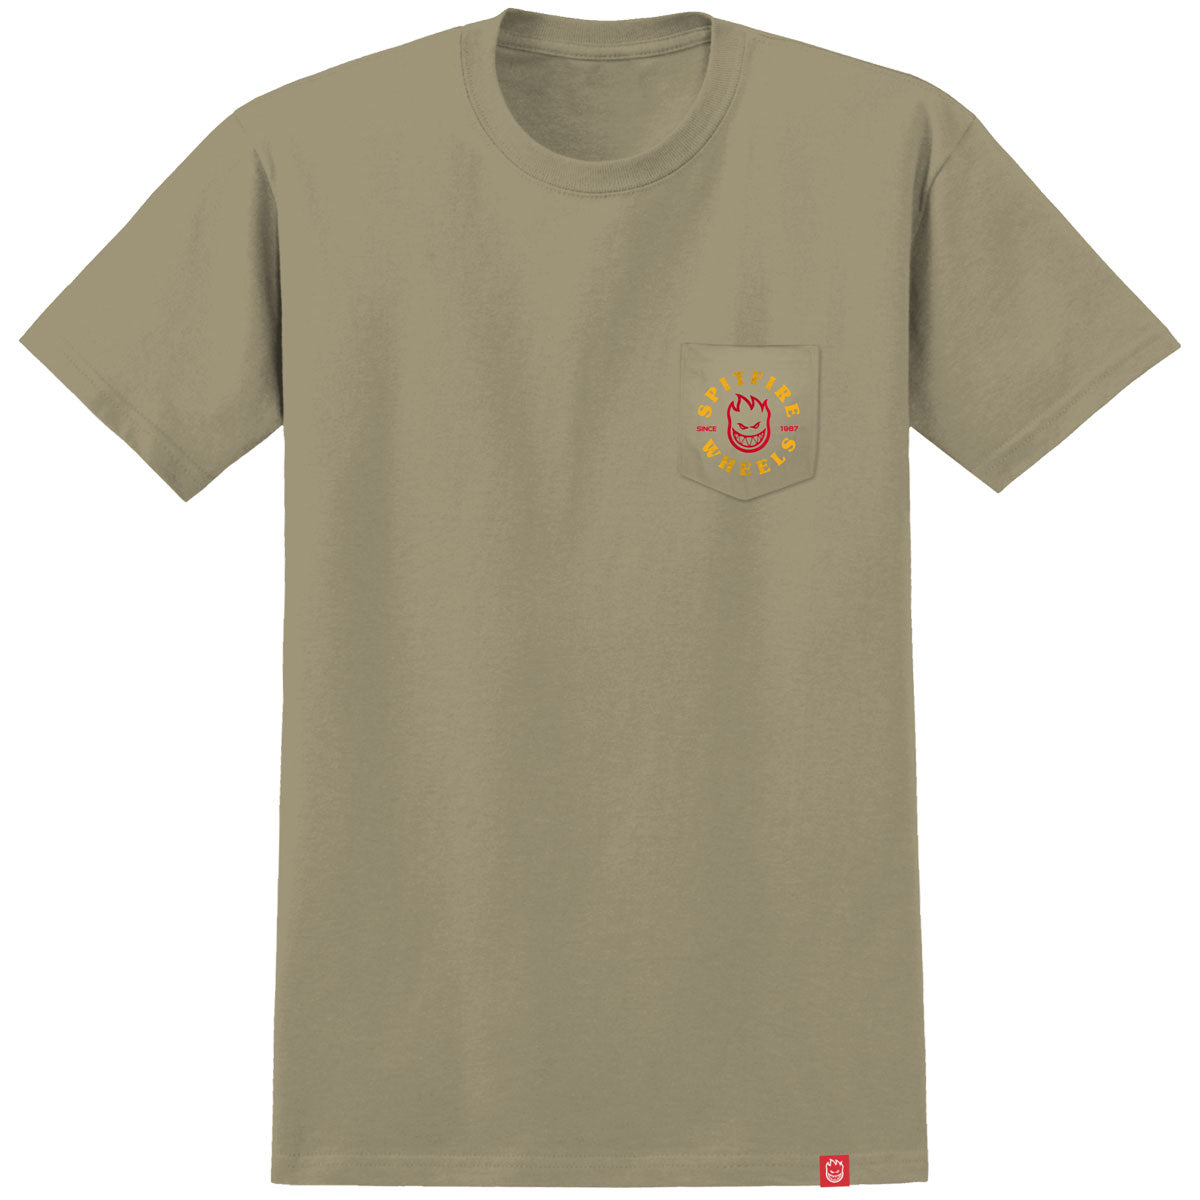 Spitfire Bighead Classic Pocket T-Shirt - Sand/Gold/Red image 1